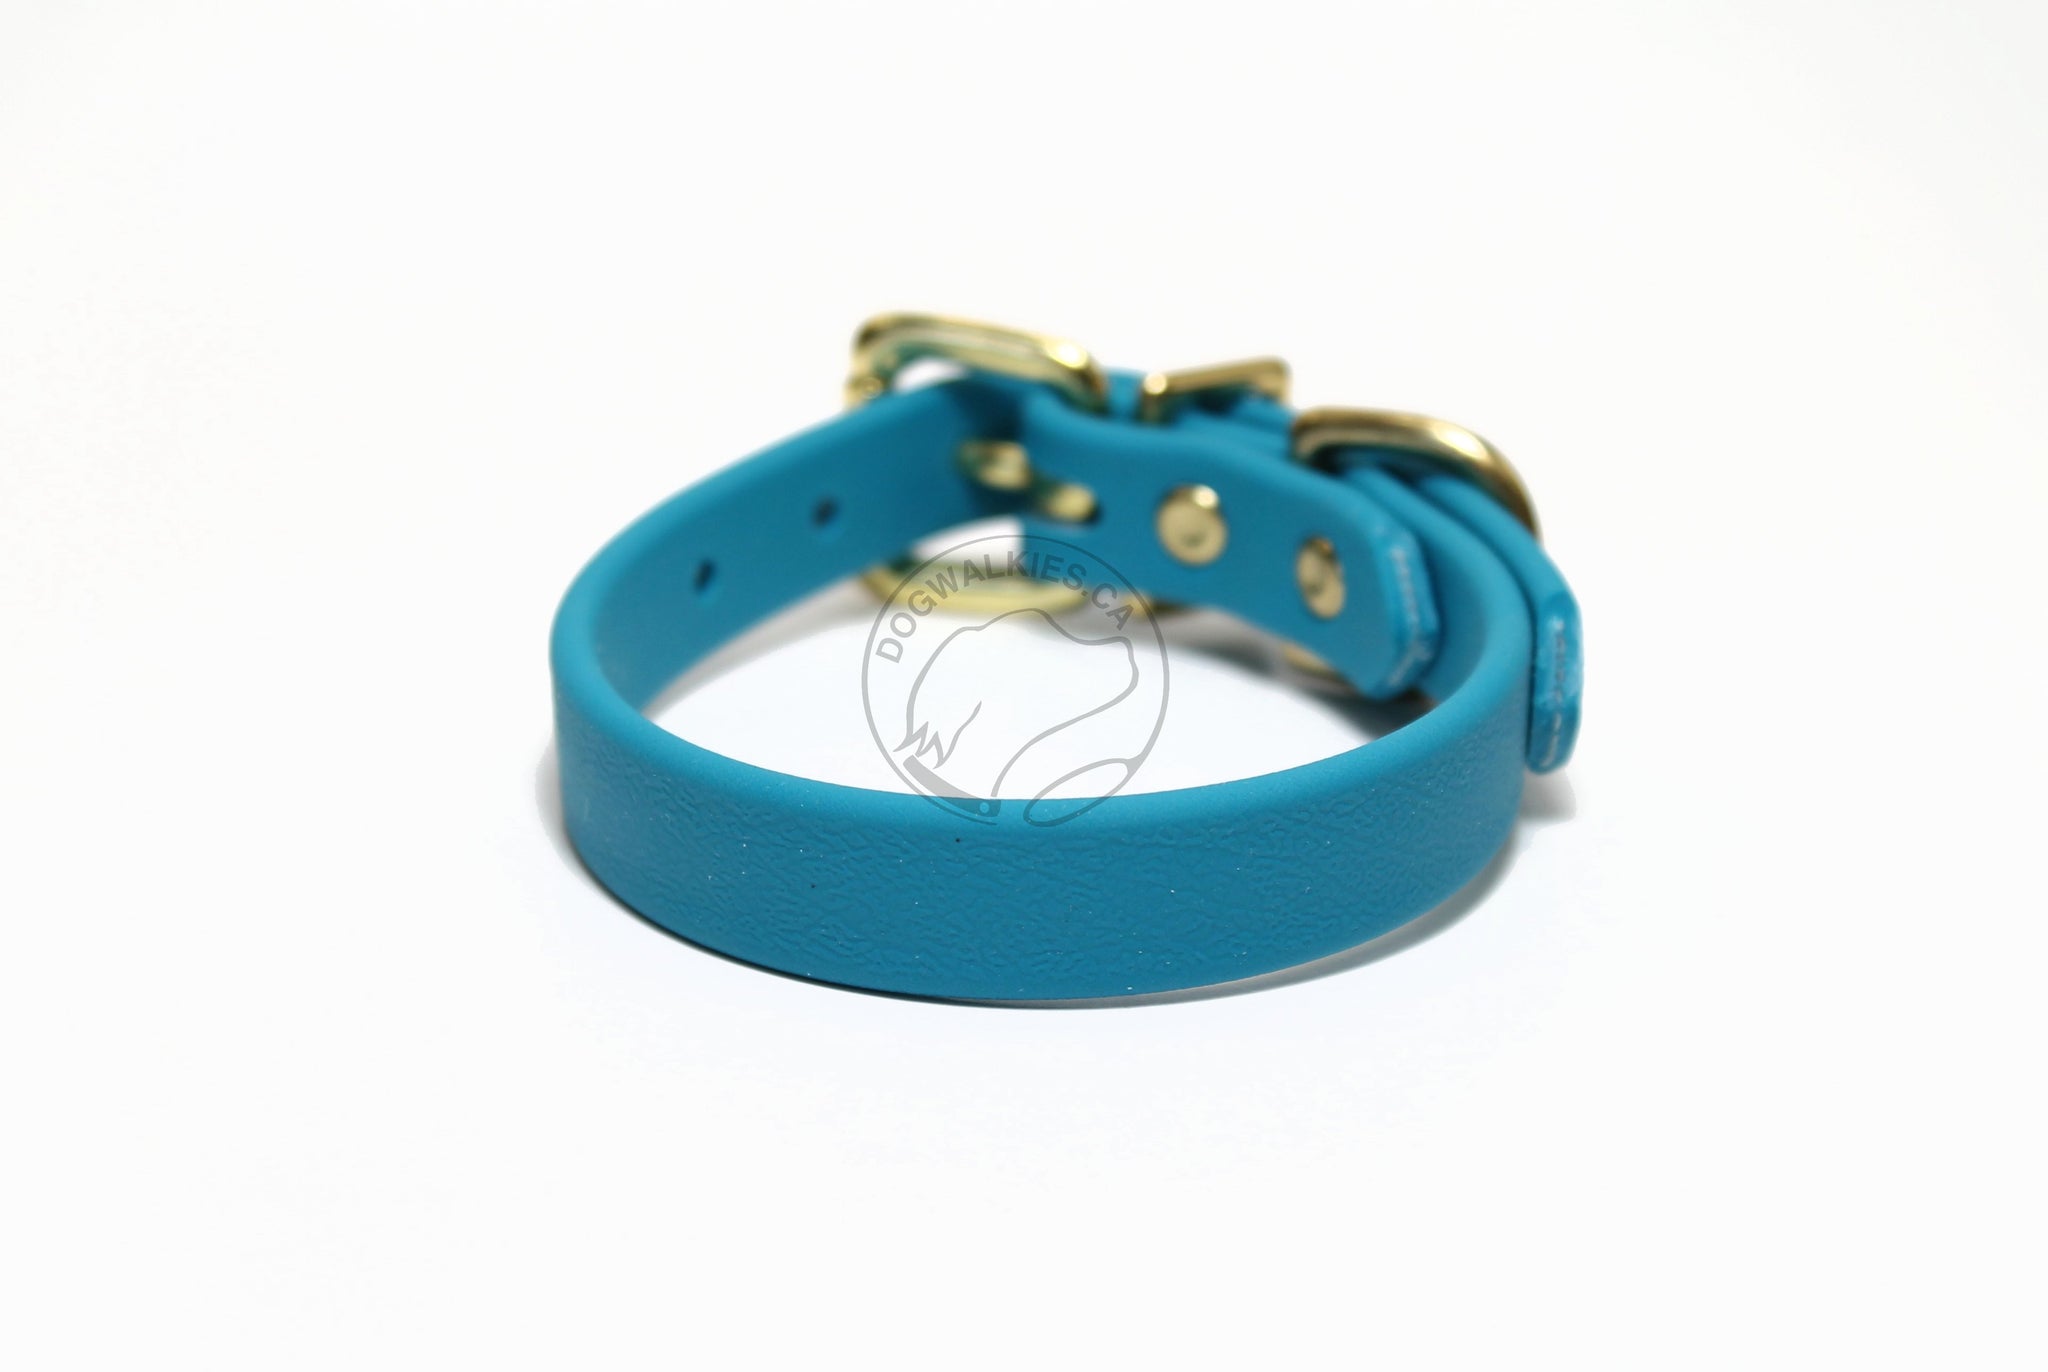 Oasis Blue Biothane Dog Collar - 5/8"(16mm) wide